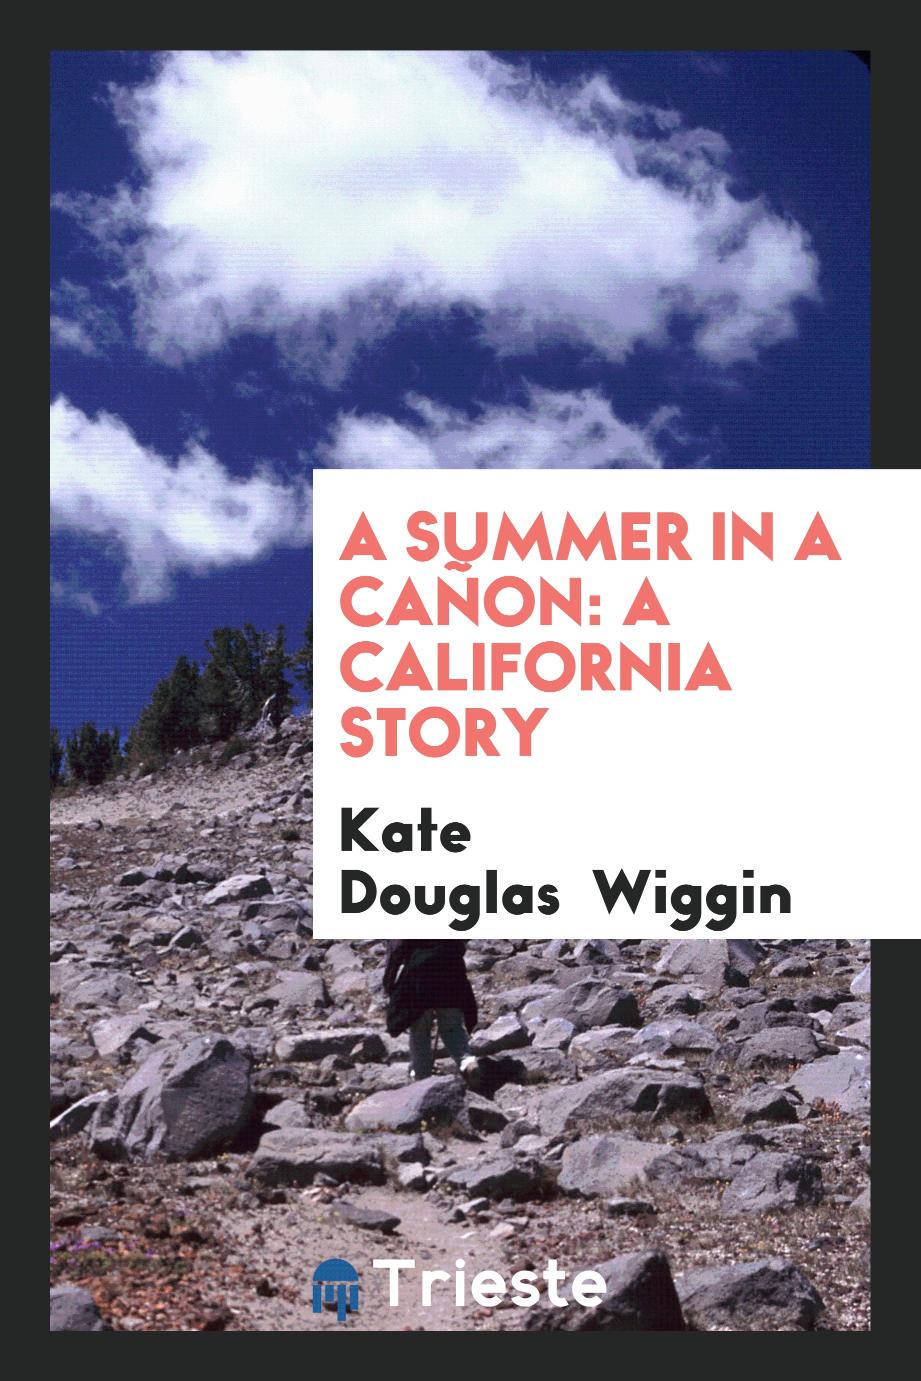 A summer in a cañon: a California story